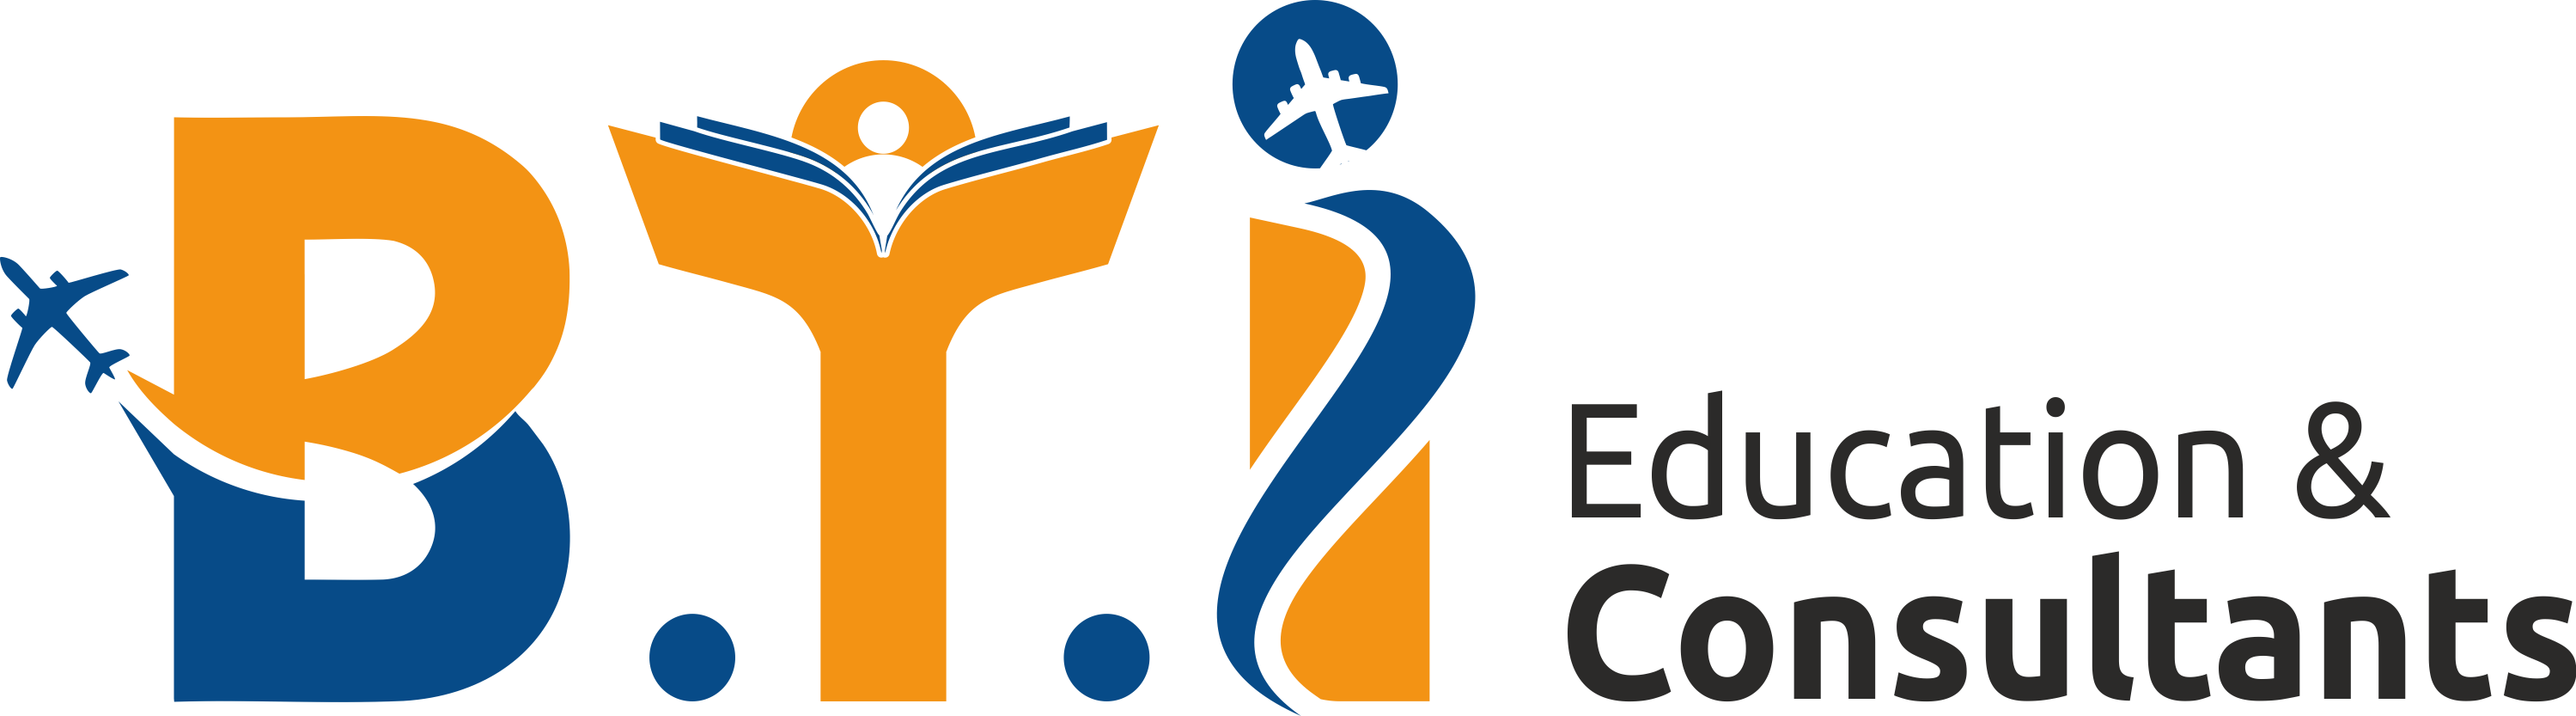 bti education immigration logo